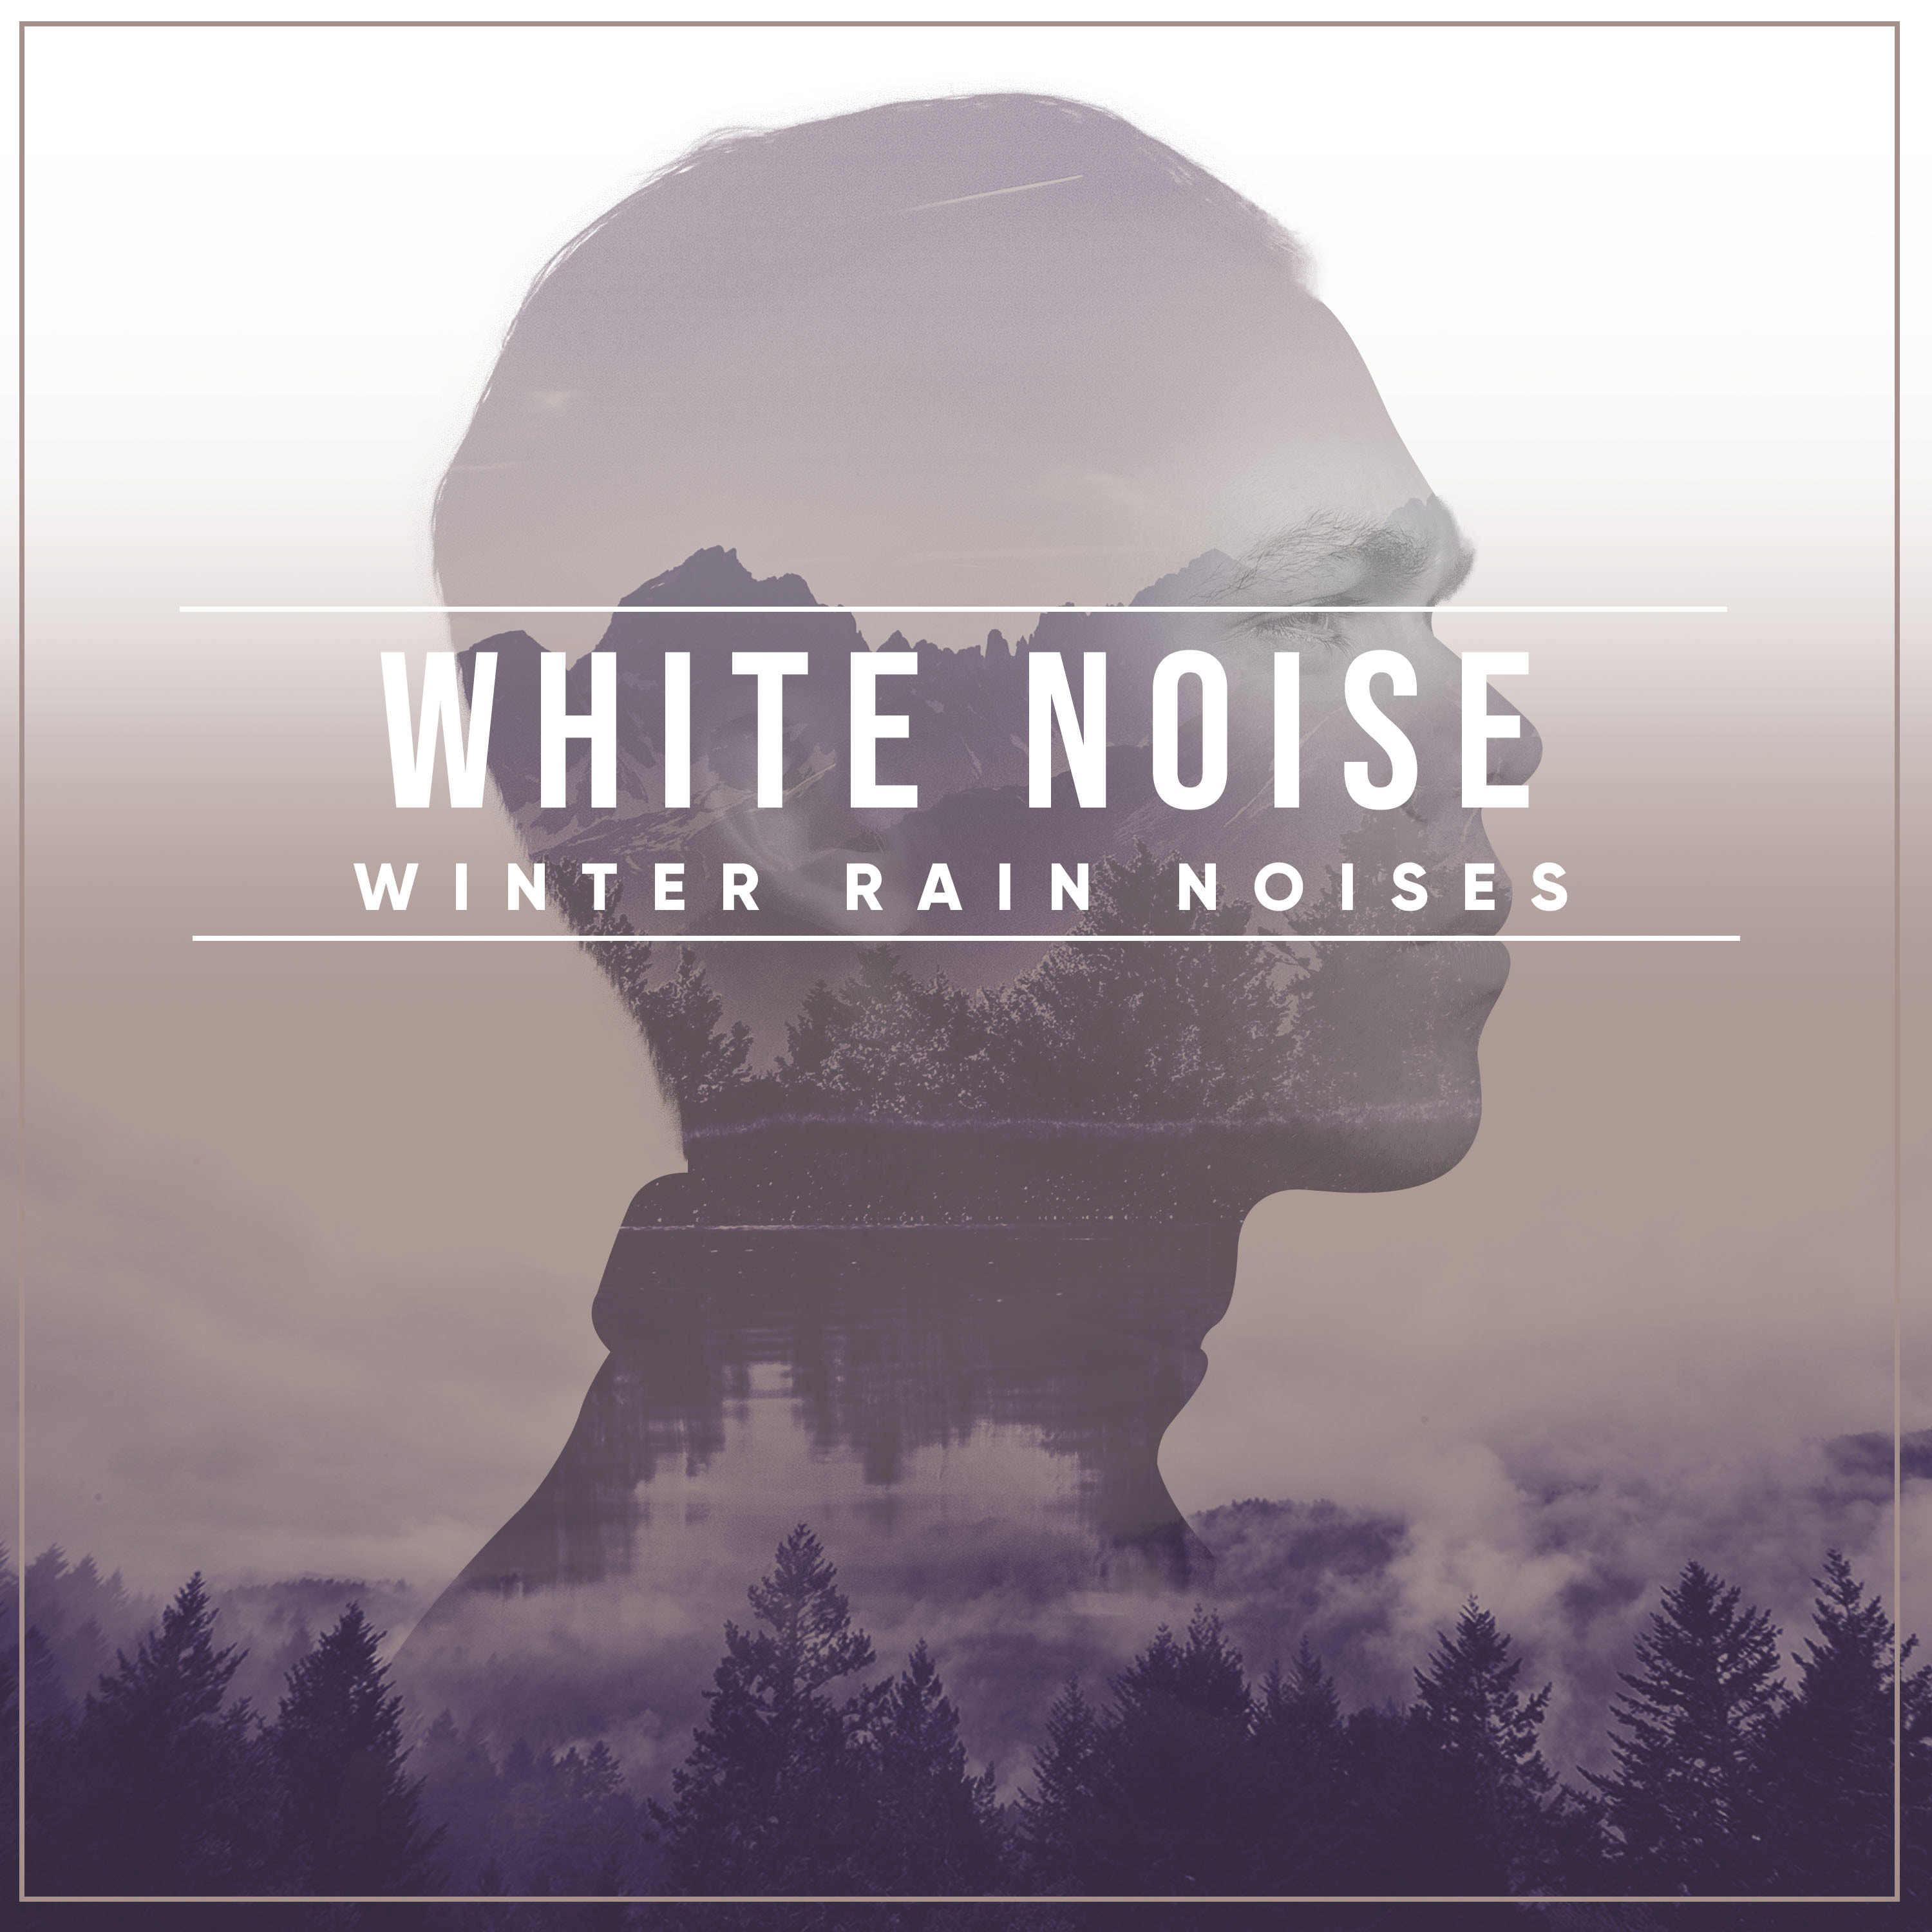 #20 White Noise Winter Rain Noises from Nature